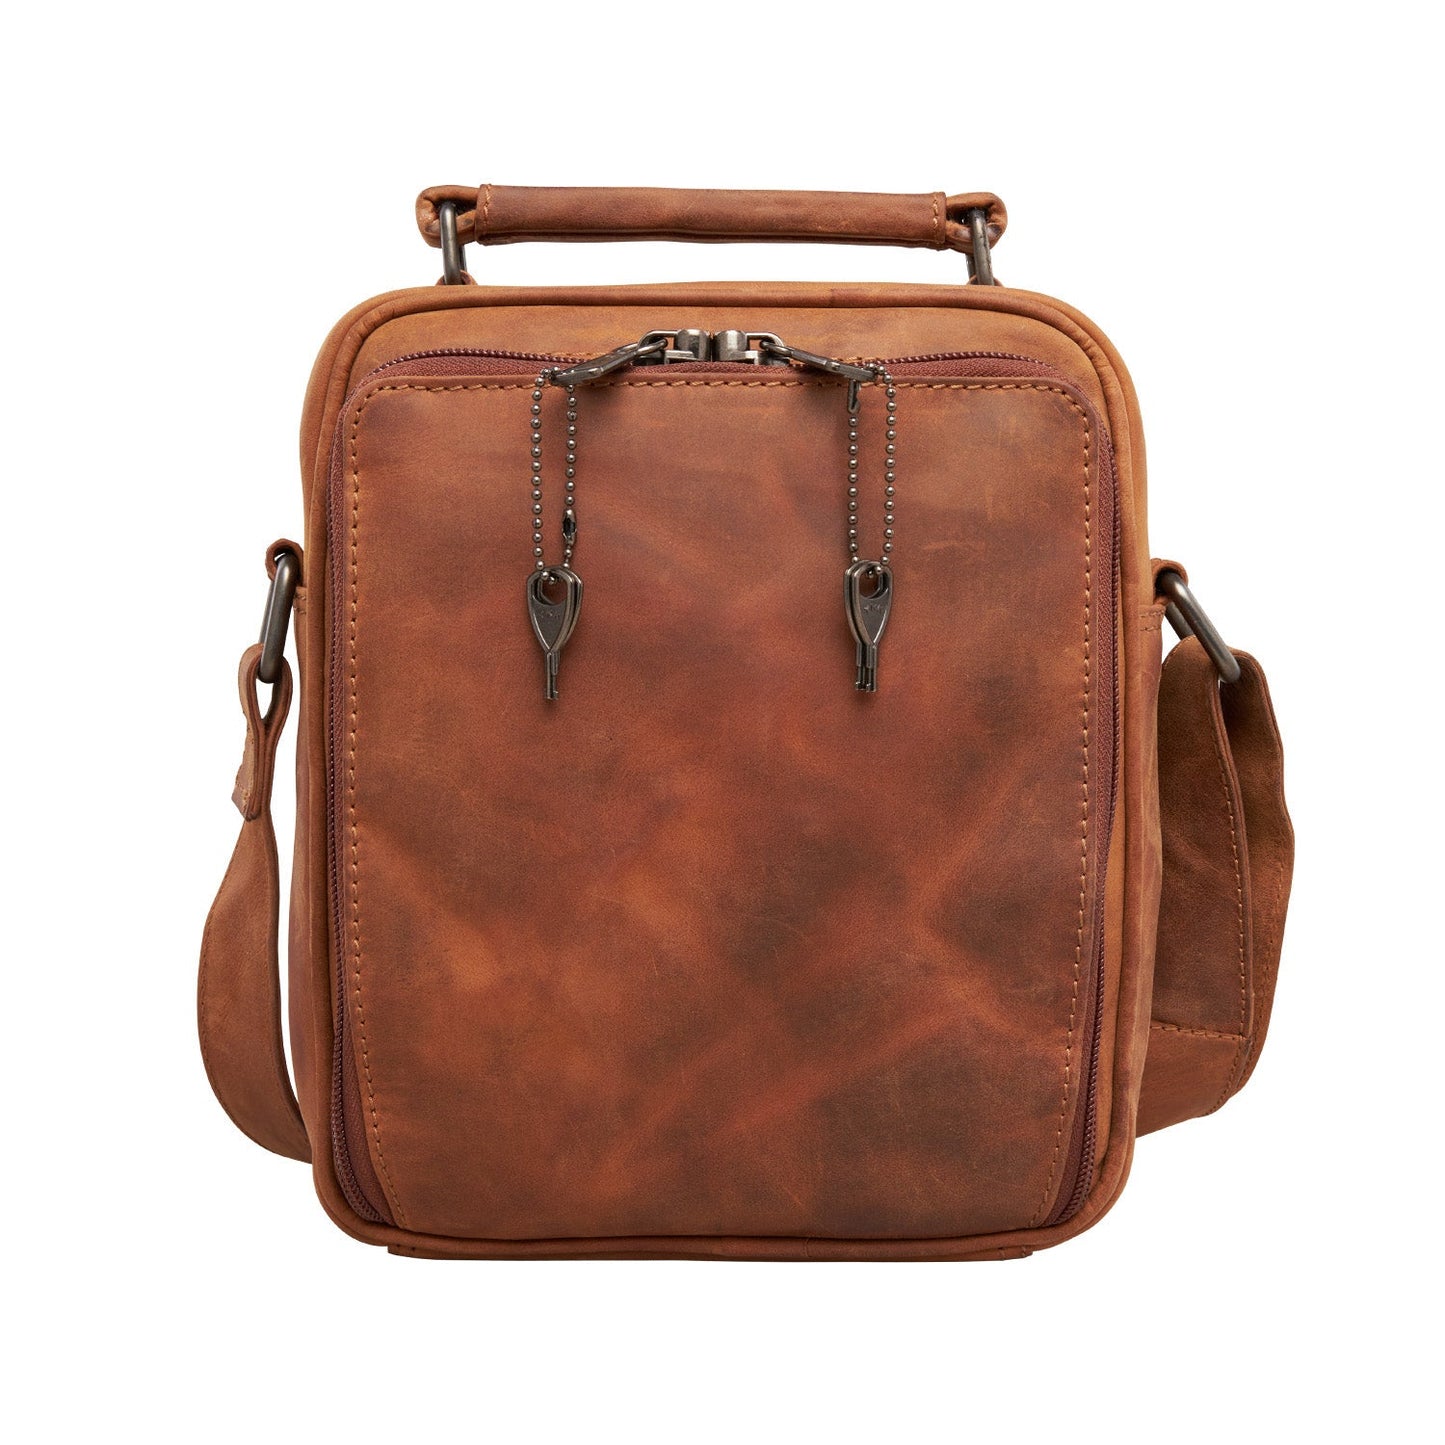 Logan Leather Conceal Carry Unisex Crossbody Bag - Hiding Hilda, LLC